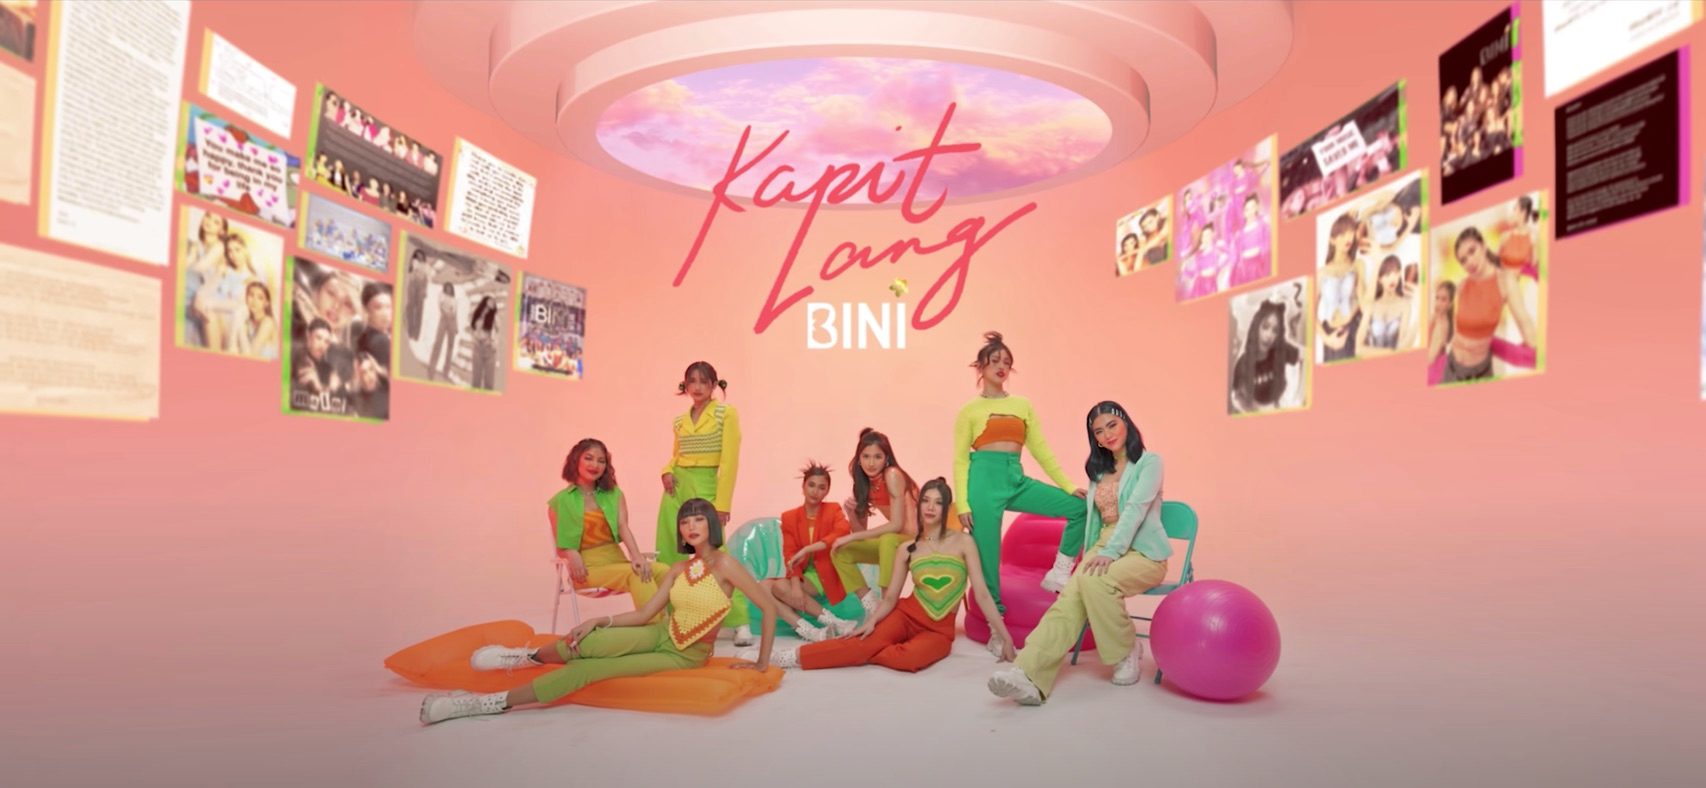 WATCH: BINI brings the good vibes in ‘Kapit Lang’ music video